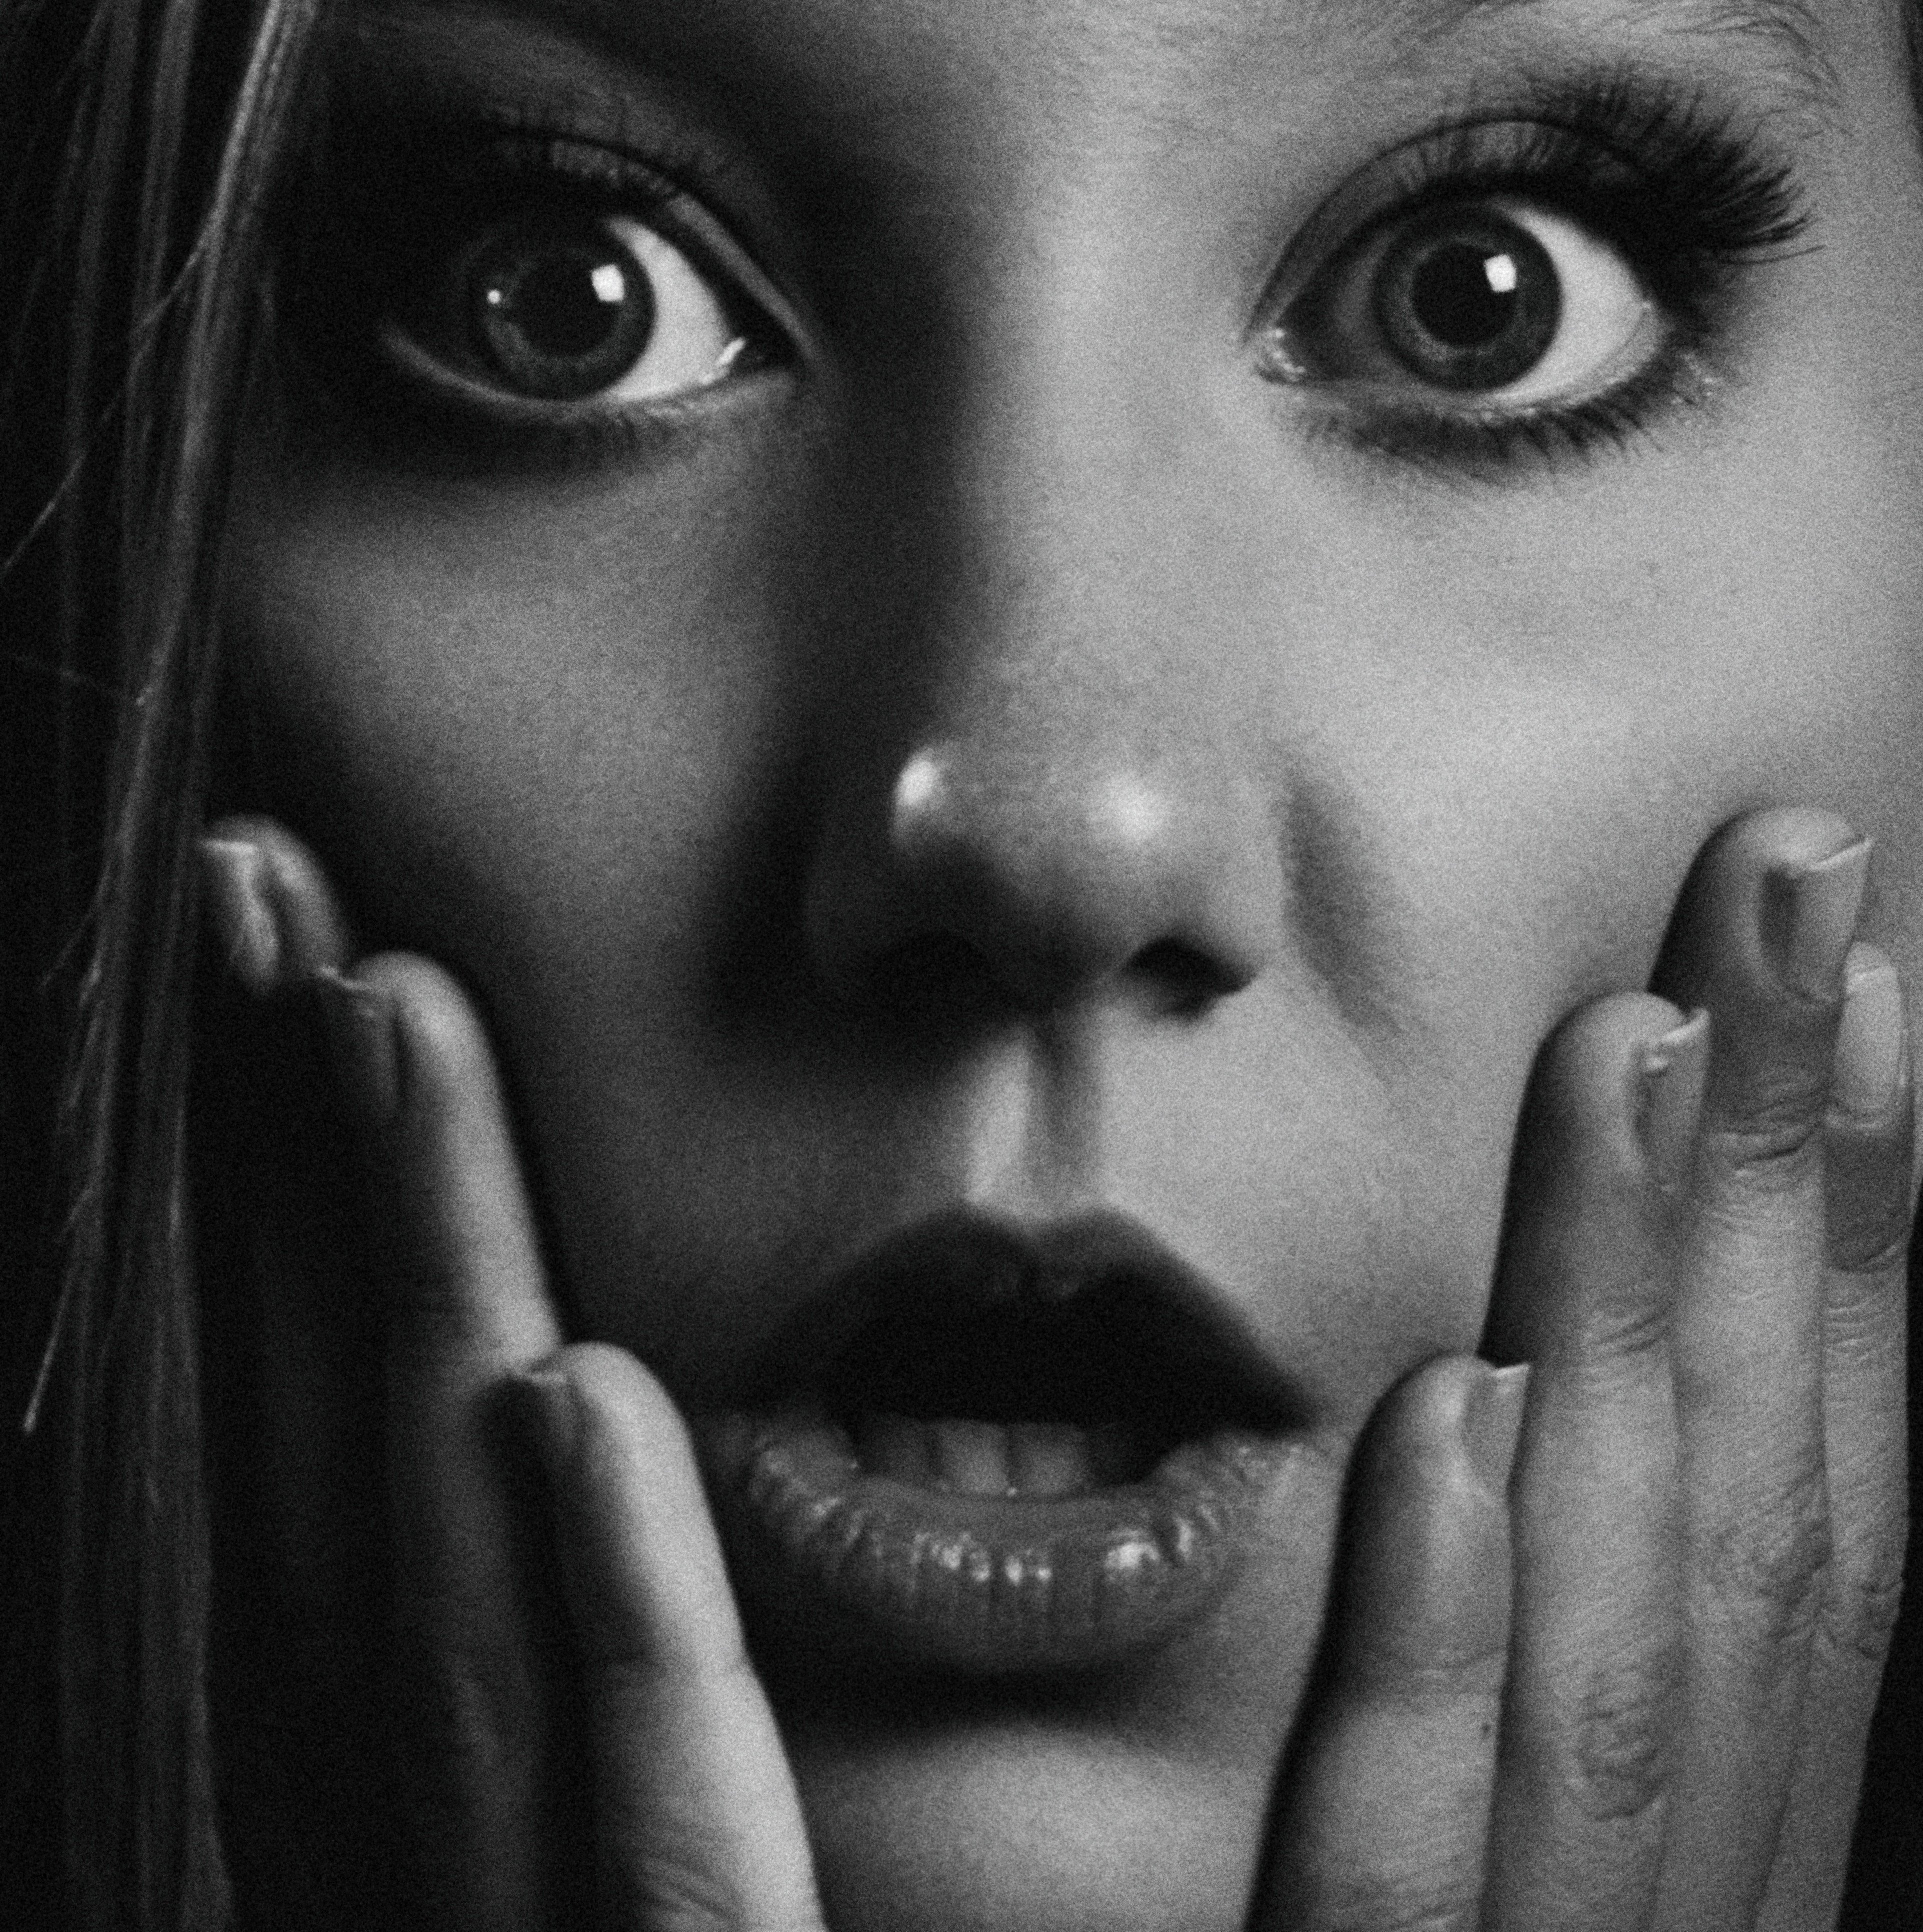 A shocked woman. | Source: Pexels/Alexander Krivitskiy